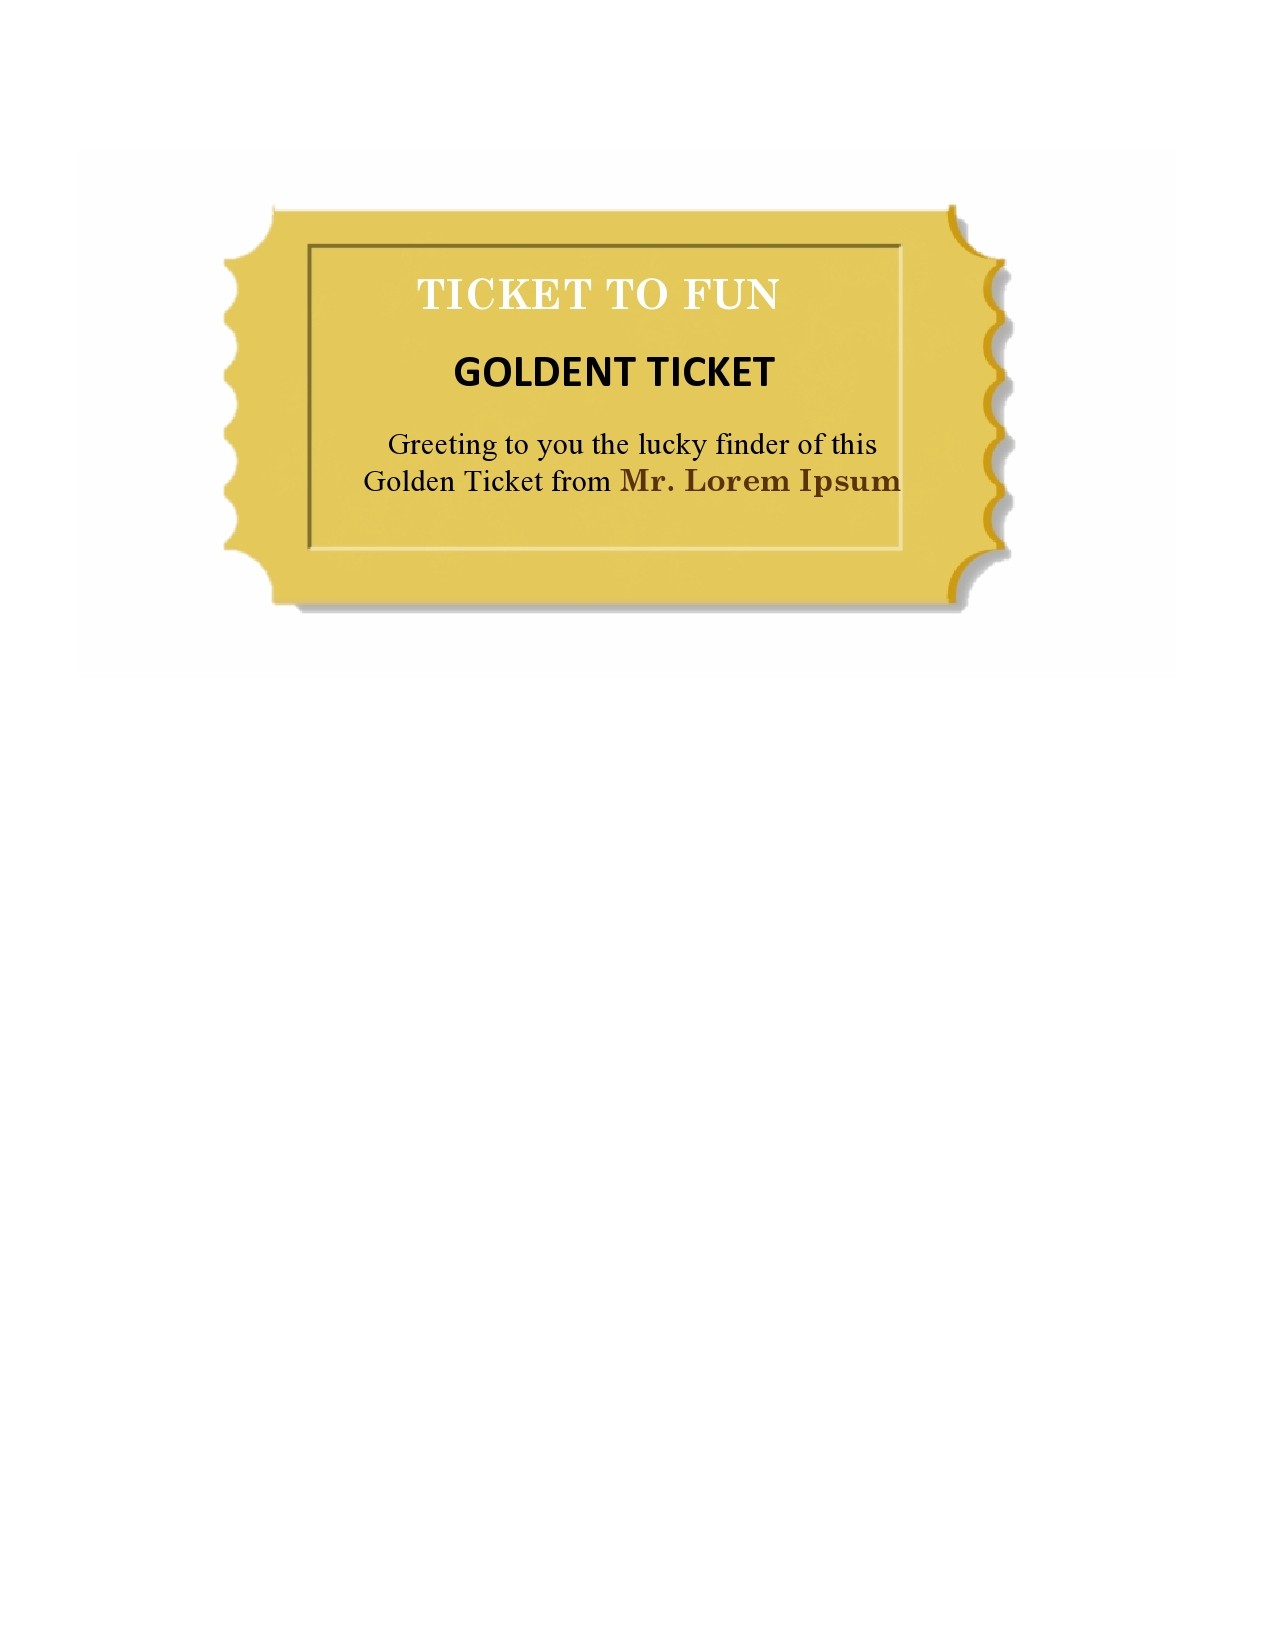 Free golden ticket template 12